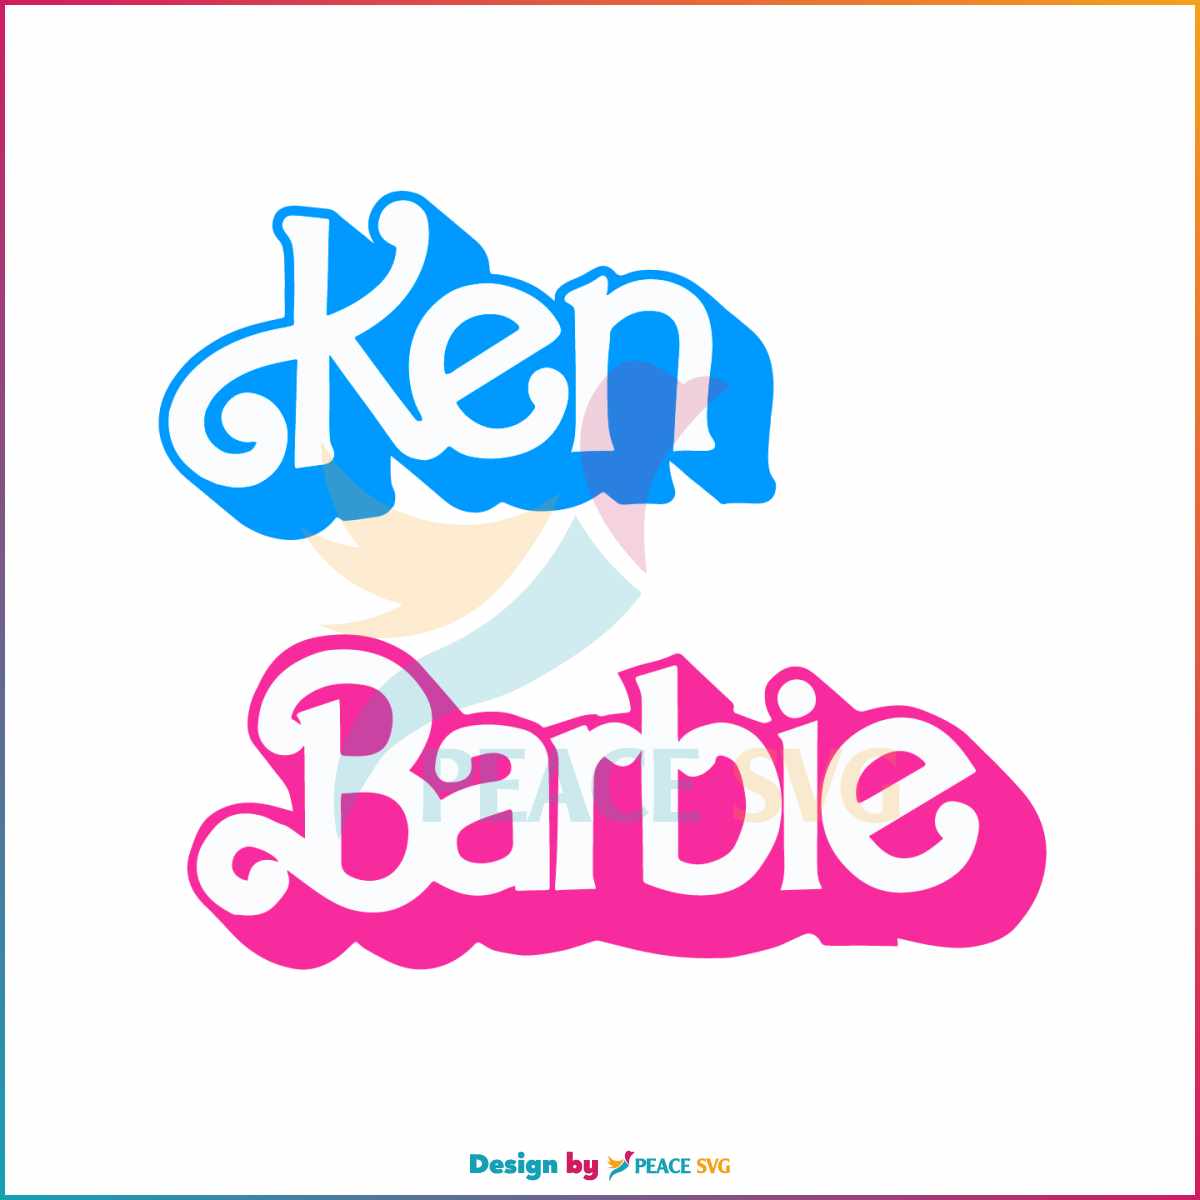 barbie-and-ken-couple-svg-barbie-movie-svg-digital-cricut-file